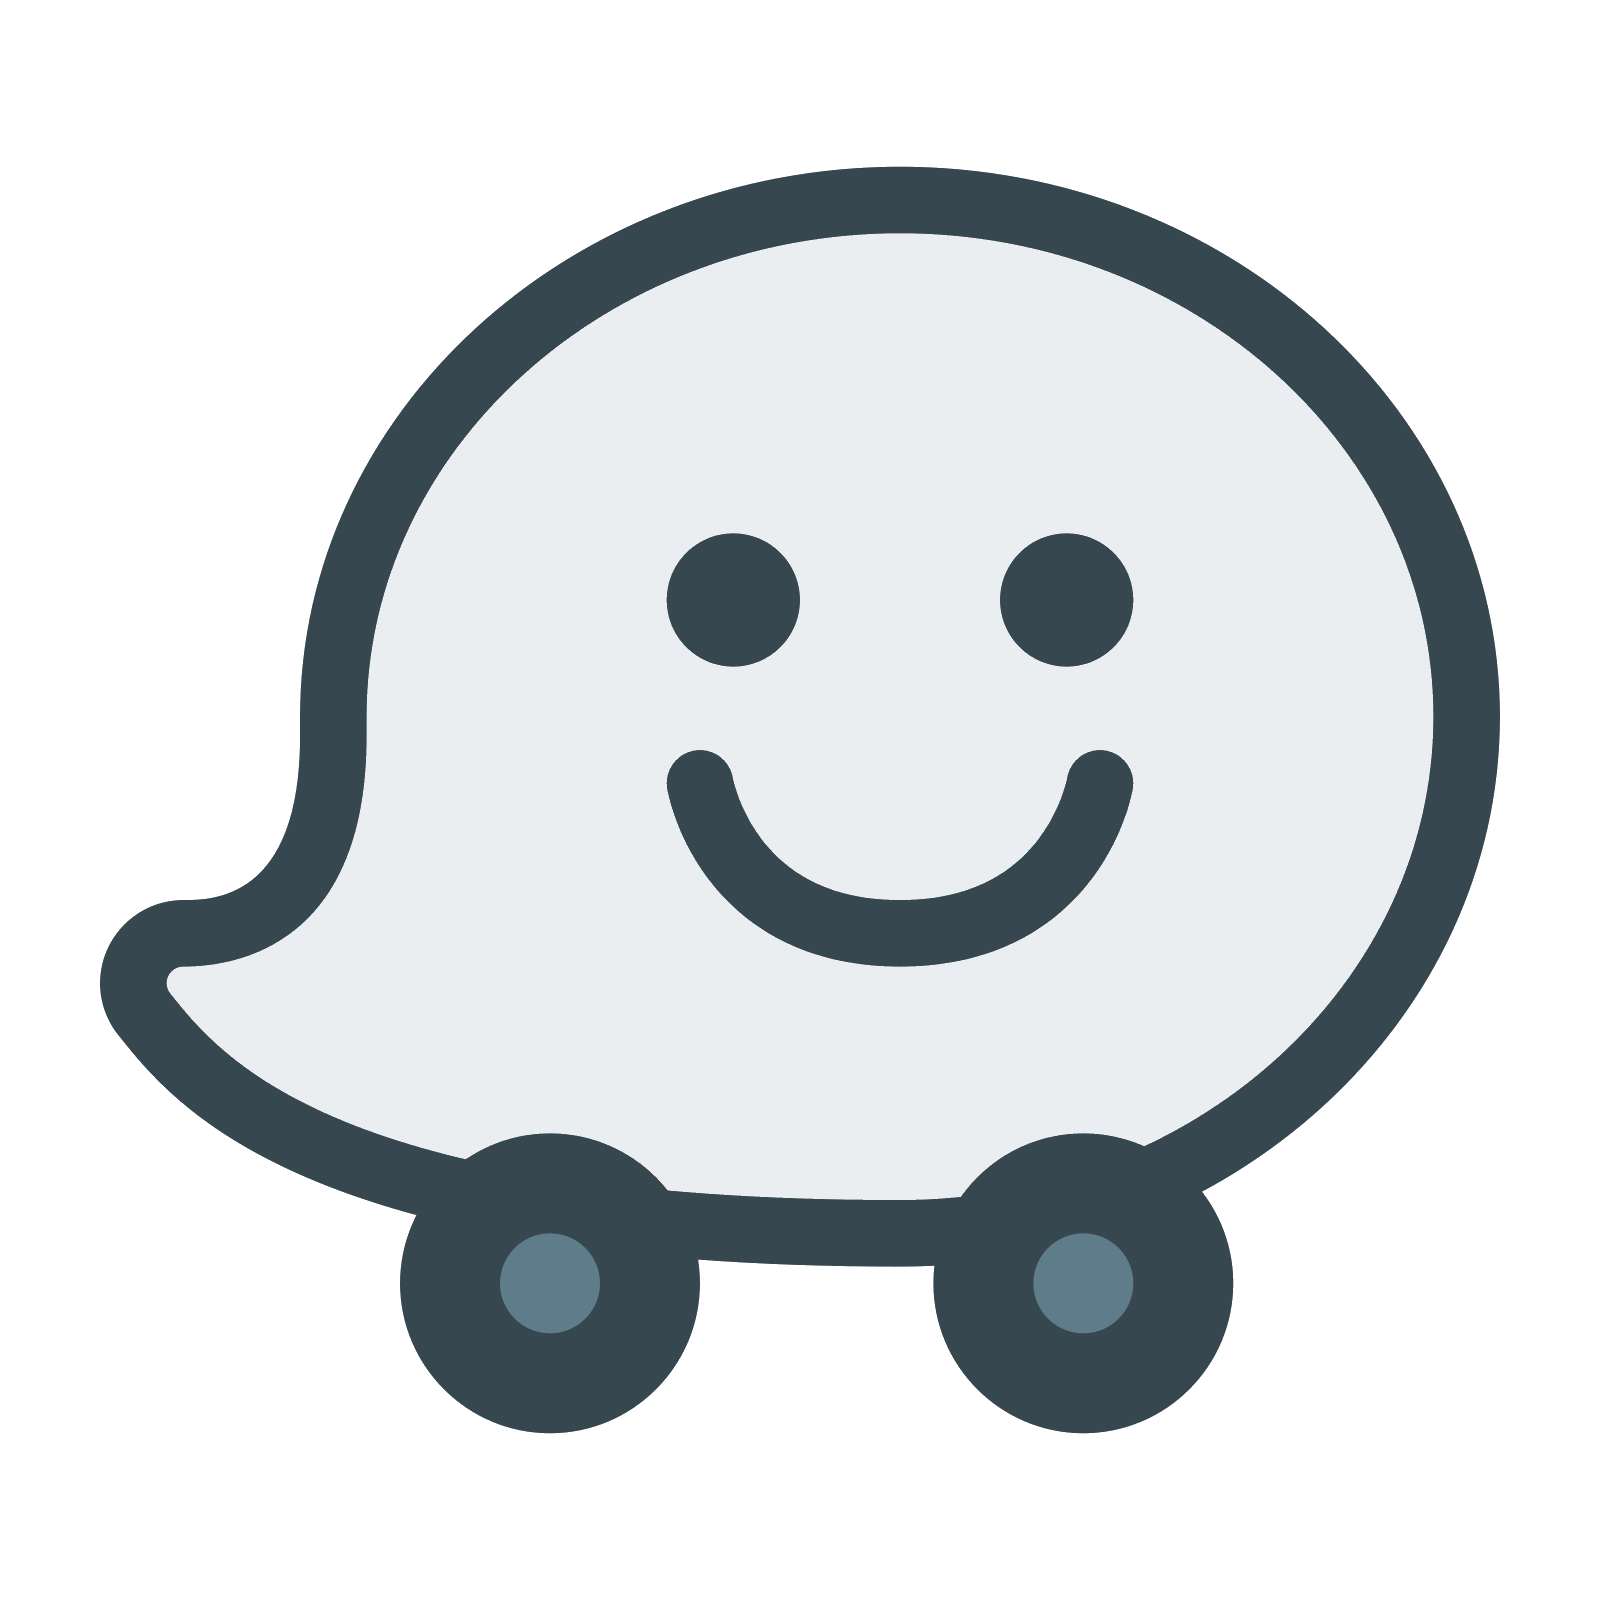 Waze Logo - Waze PNG images free download